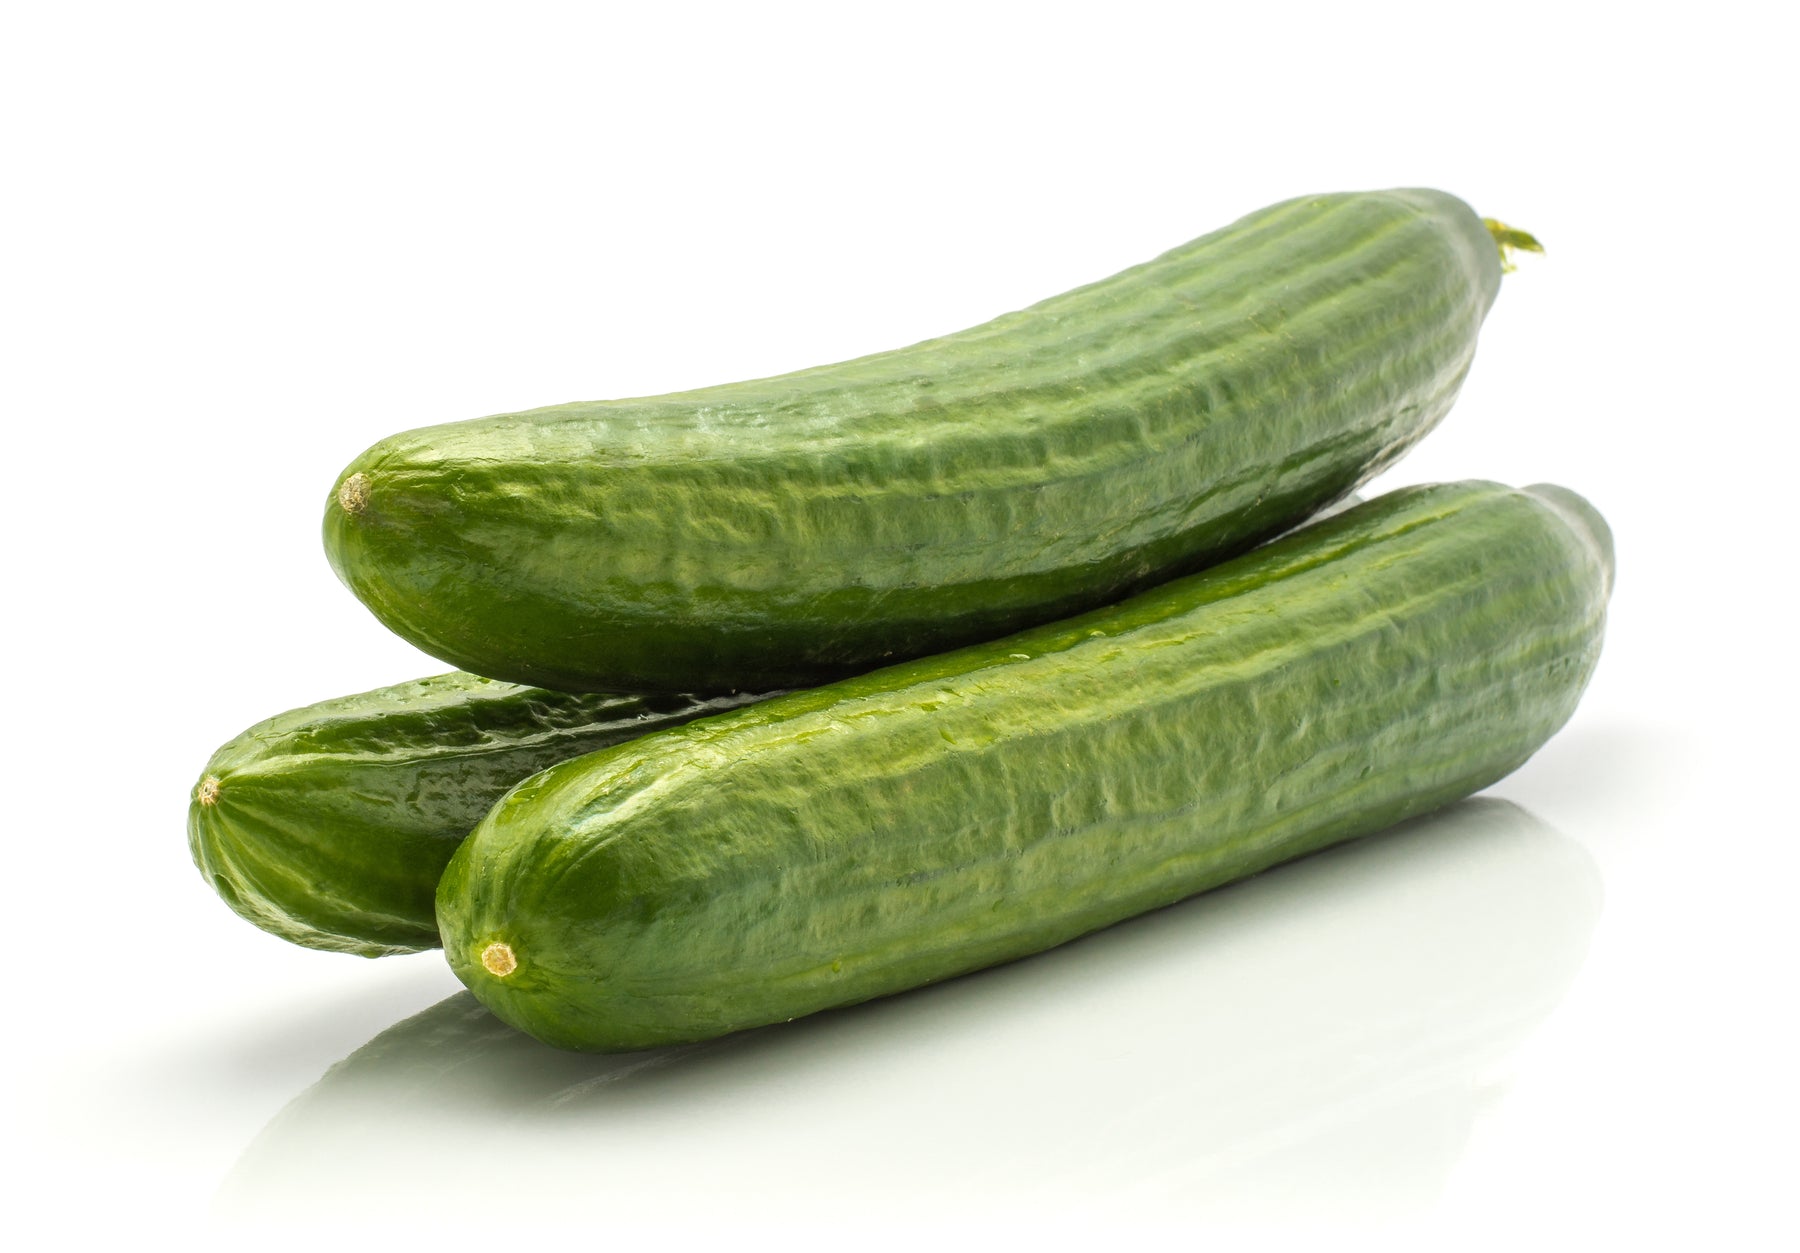 3 Burpless Cucumbers stacked